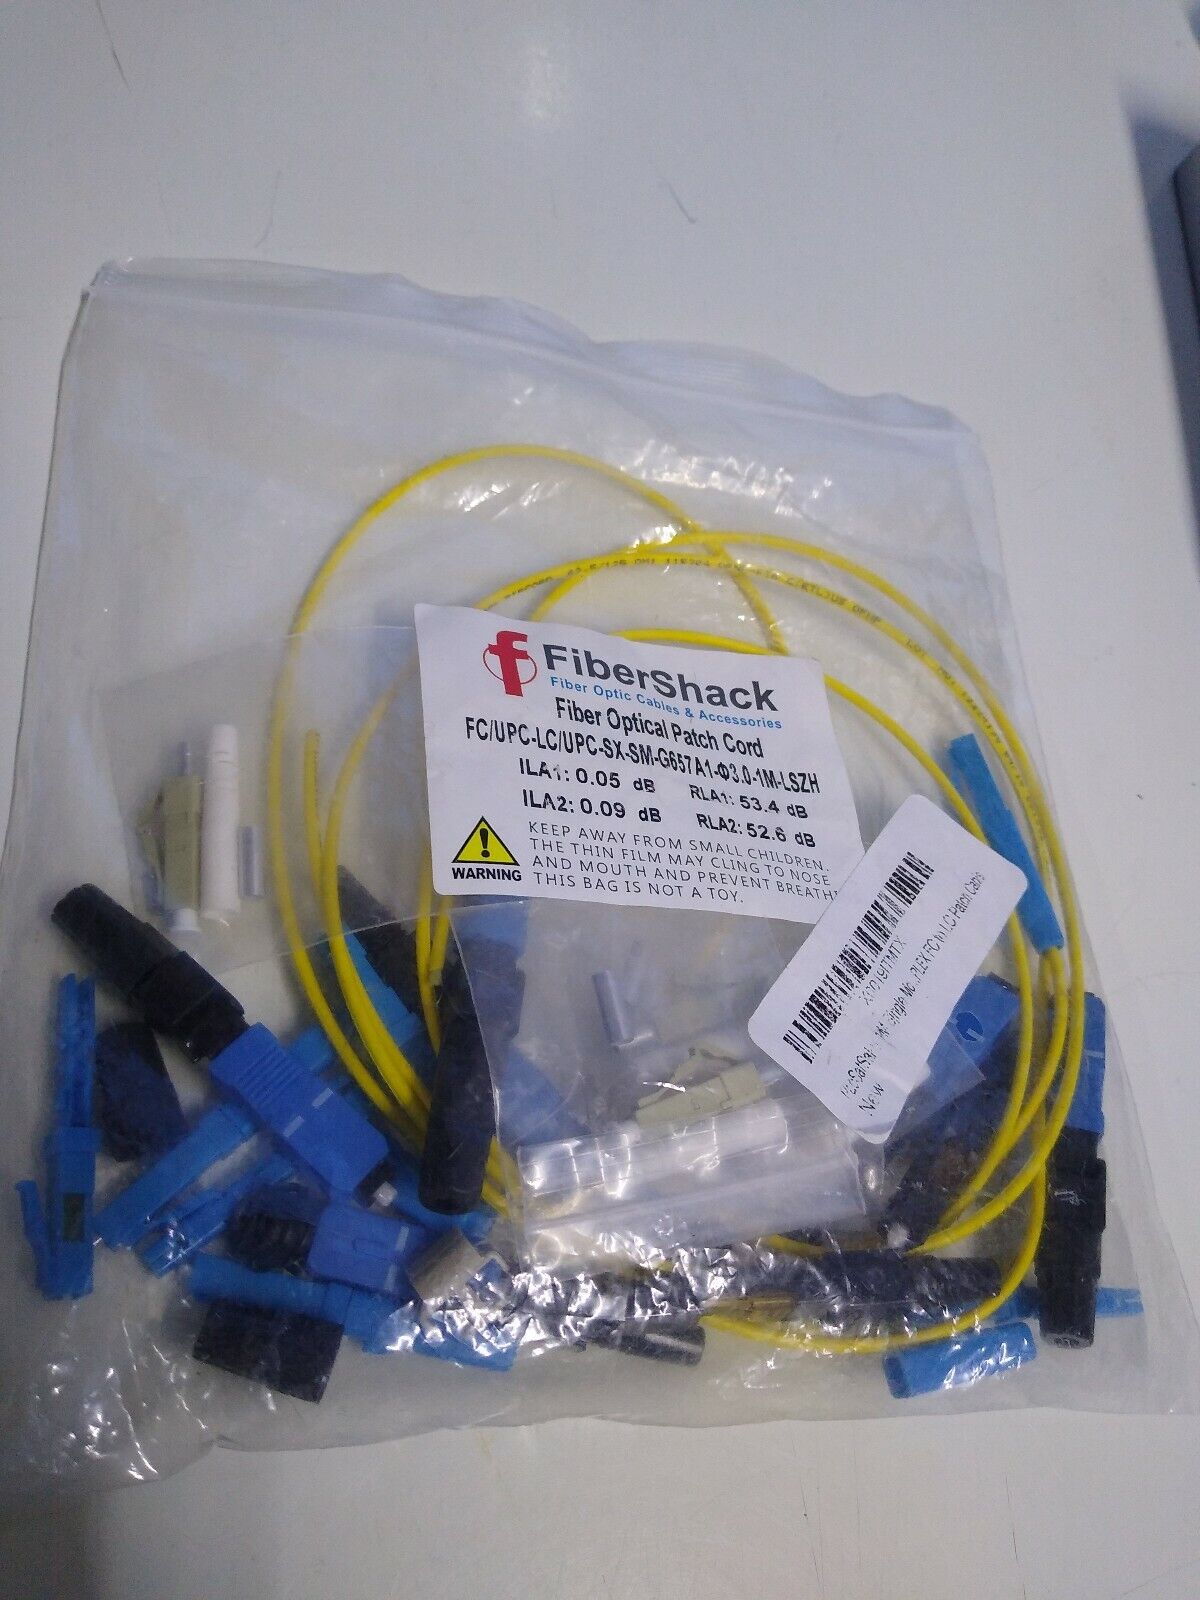 Fibershack Single Fiber Optical Patch Cord Multiple Piece Lot Ships FREE